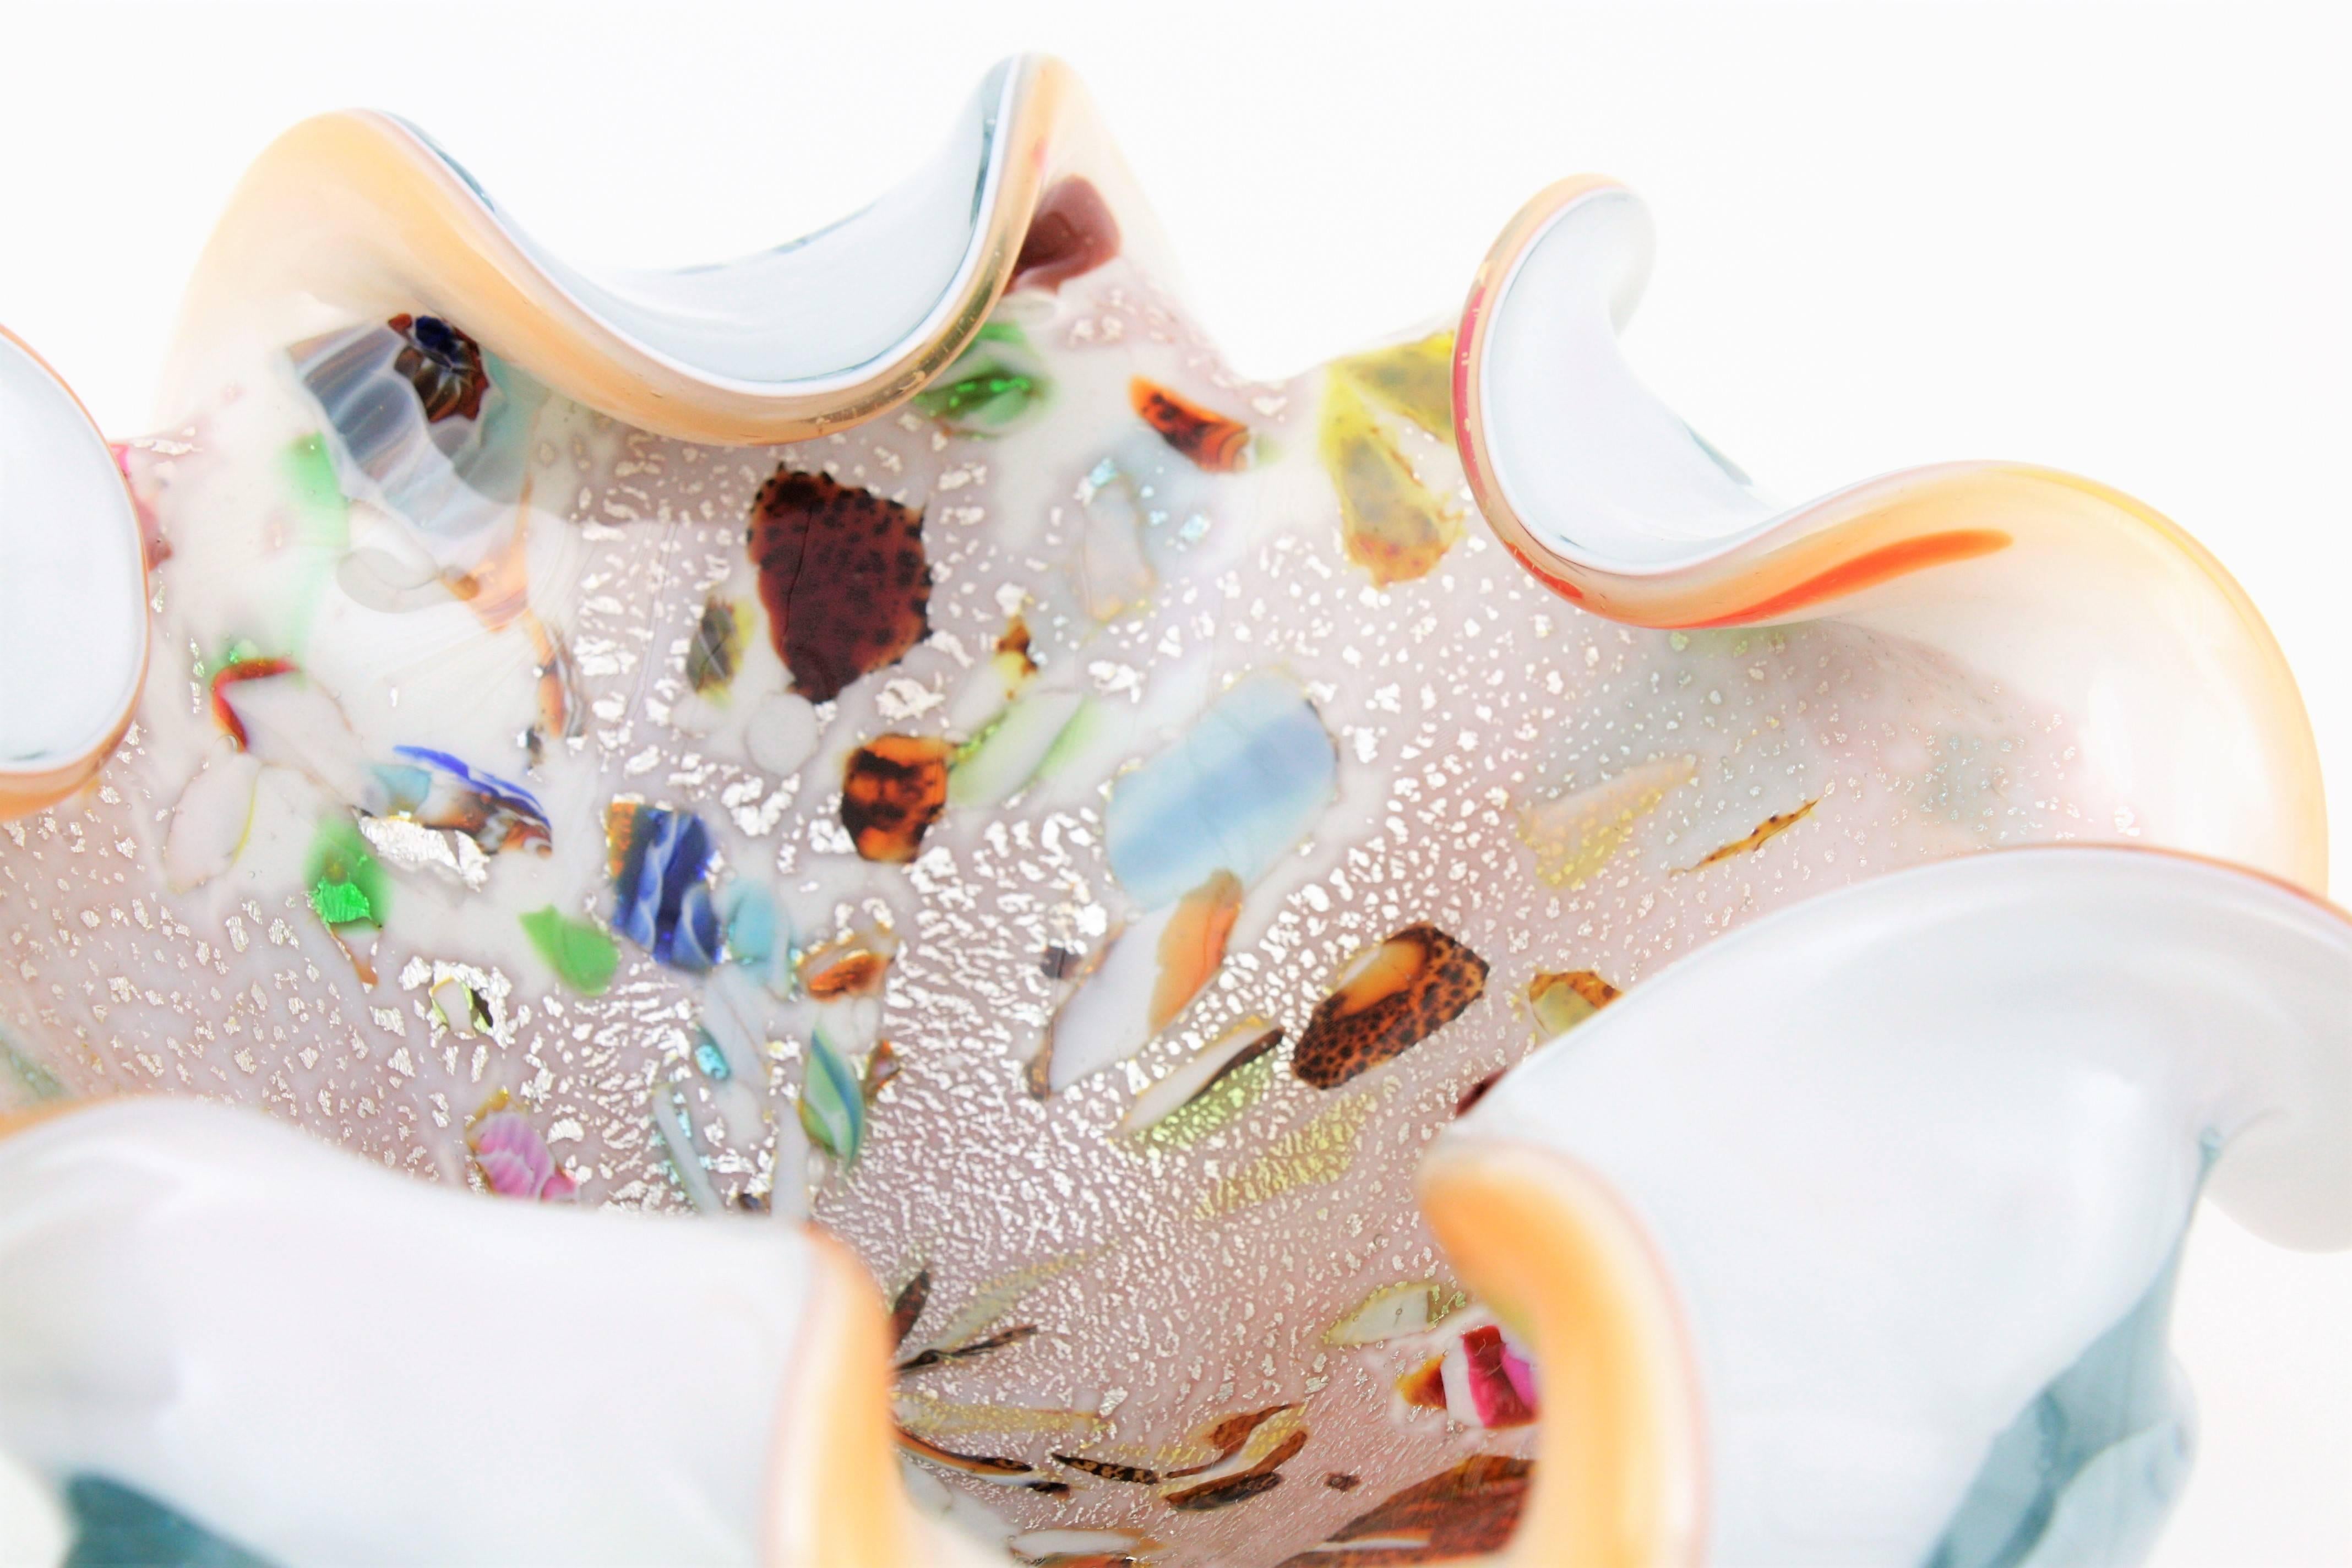 Sculptural and colorful Tutti Frutti Murano art glass bowl attributed to Dino Martens and Arte Vetreria Muranese. Zanfirico and latticino techniques in pastel colors and silver aventurine flecks inclussions.
The bowl has a whimsically beautiful